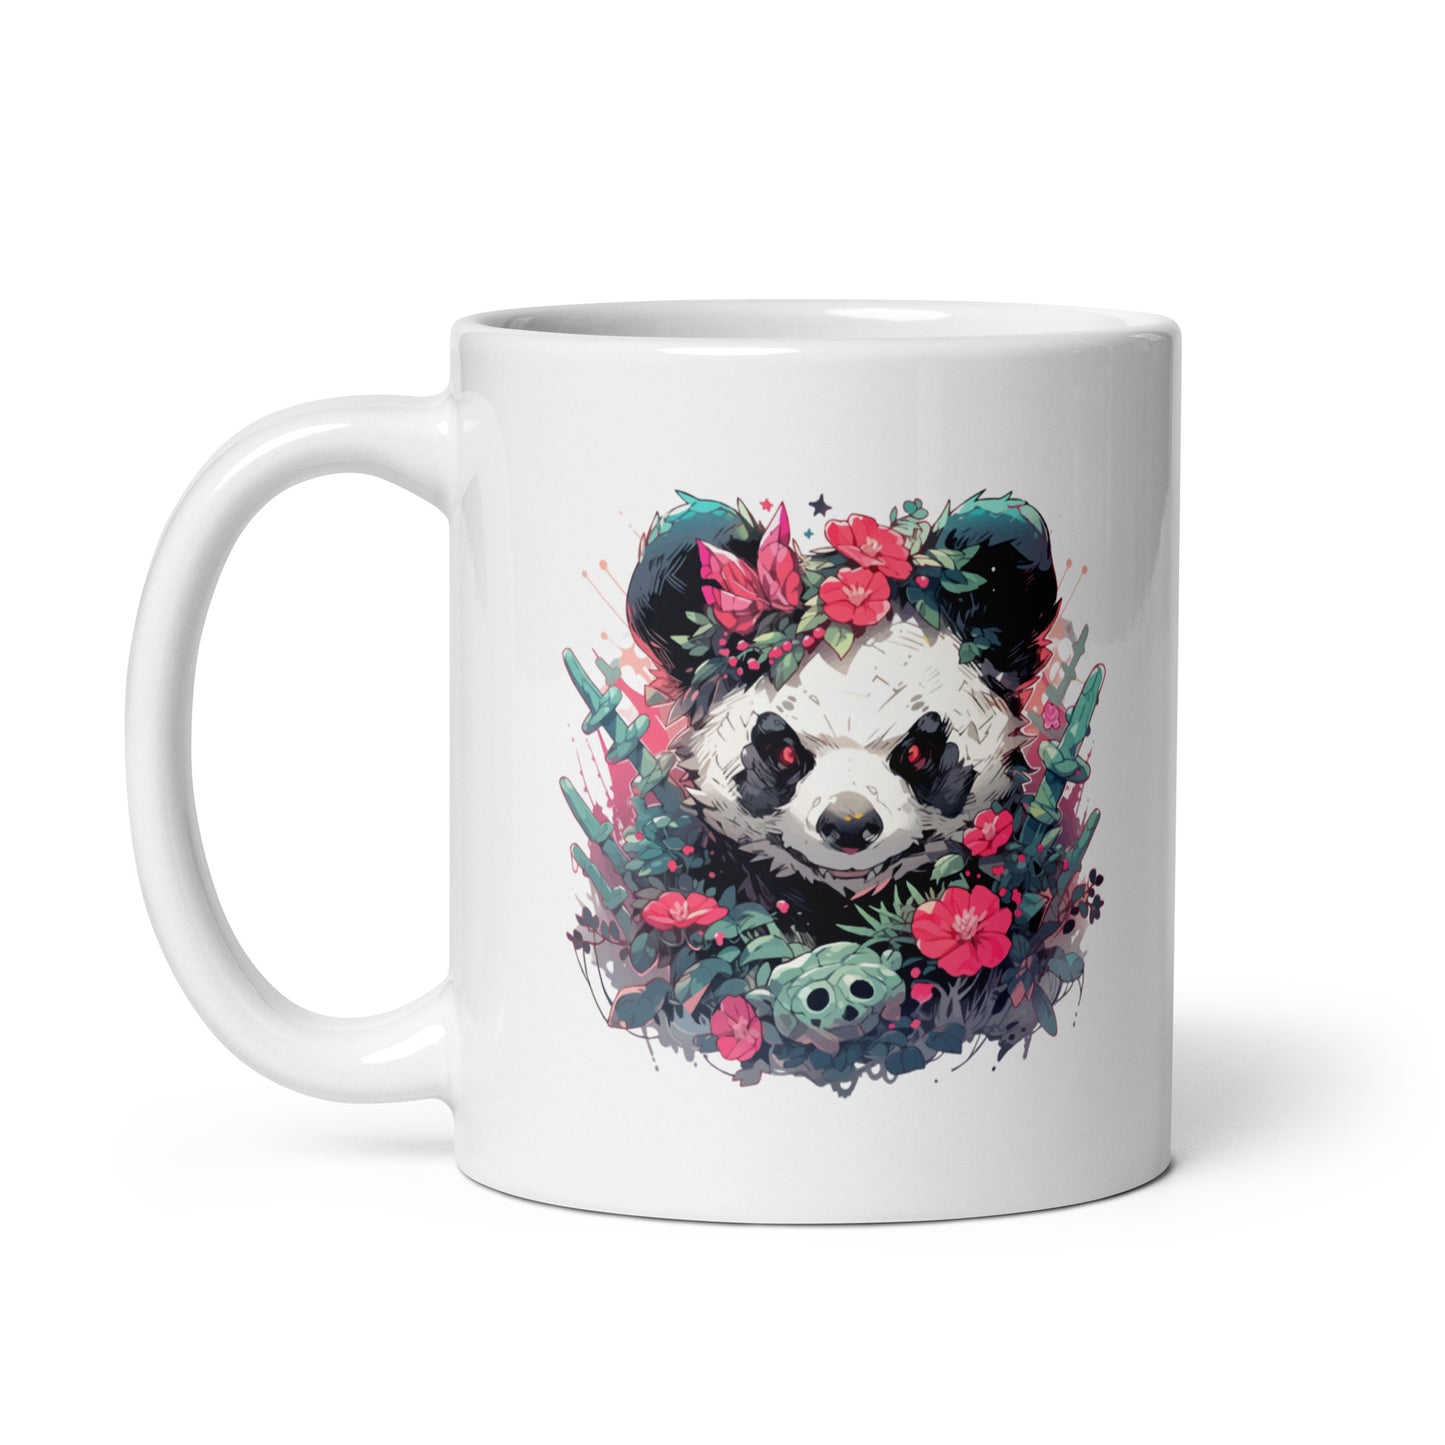 Angry panda in flowers, Bamboo bear and cactus, Black and white bear, Red eyes animal wild - White glossy mug